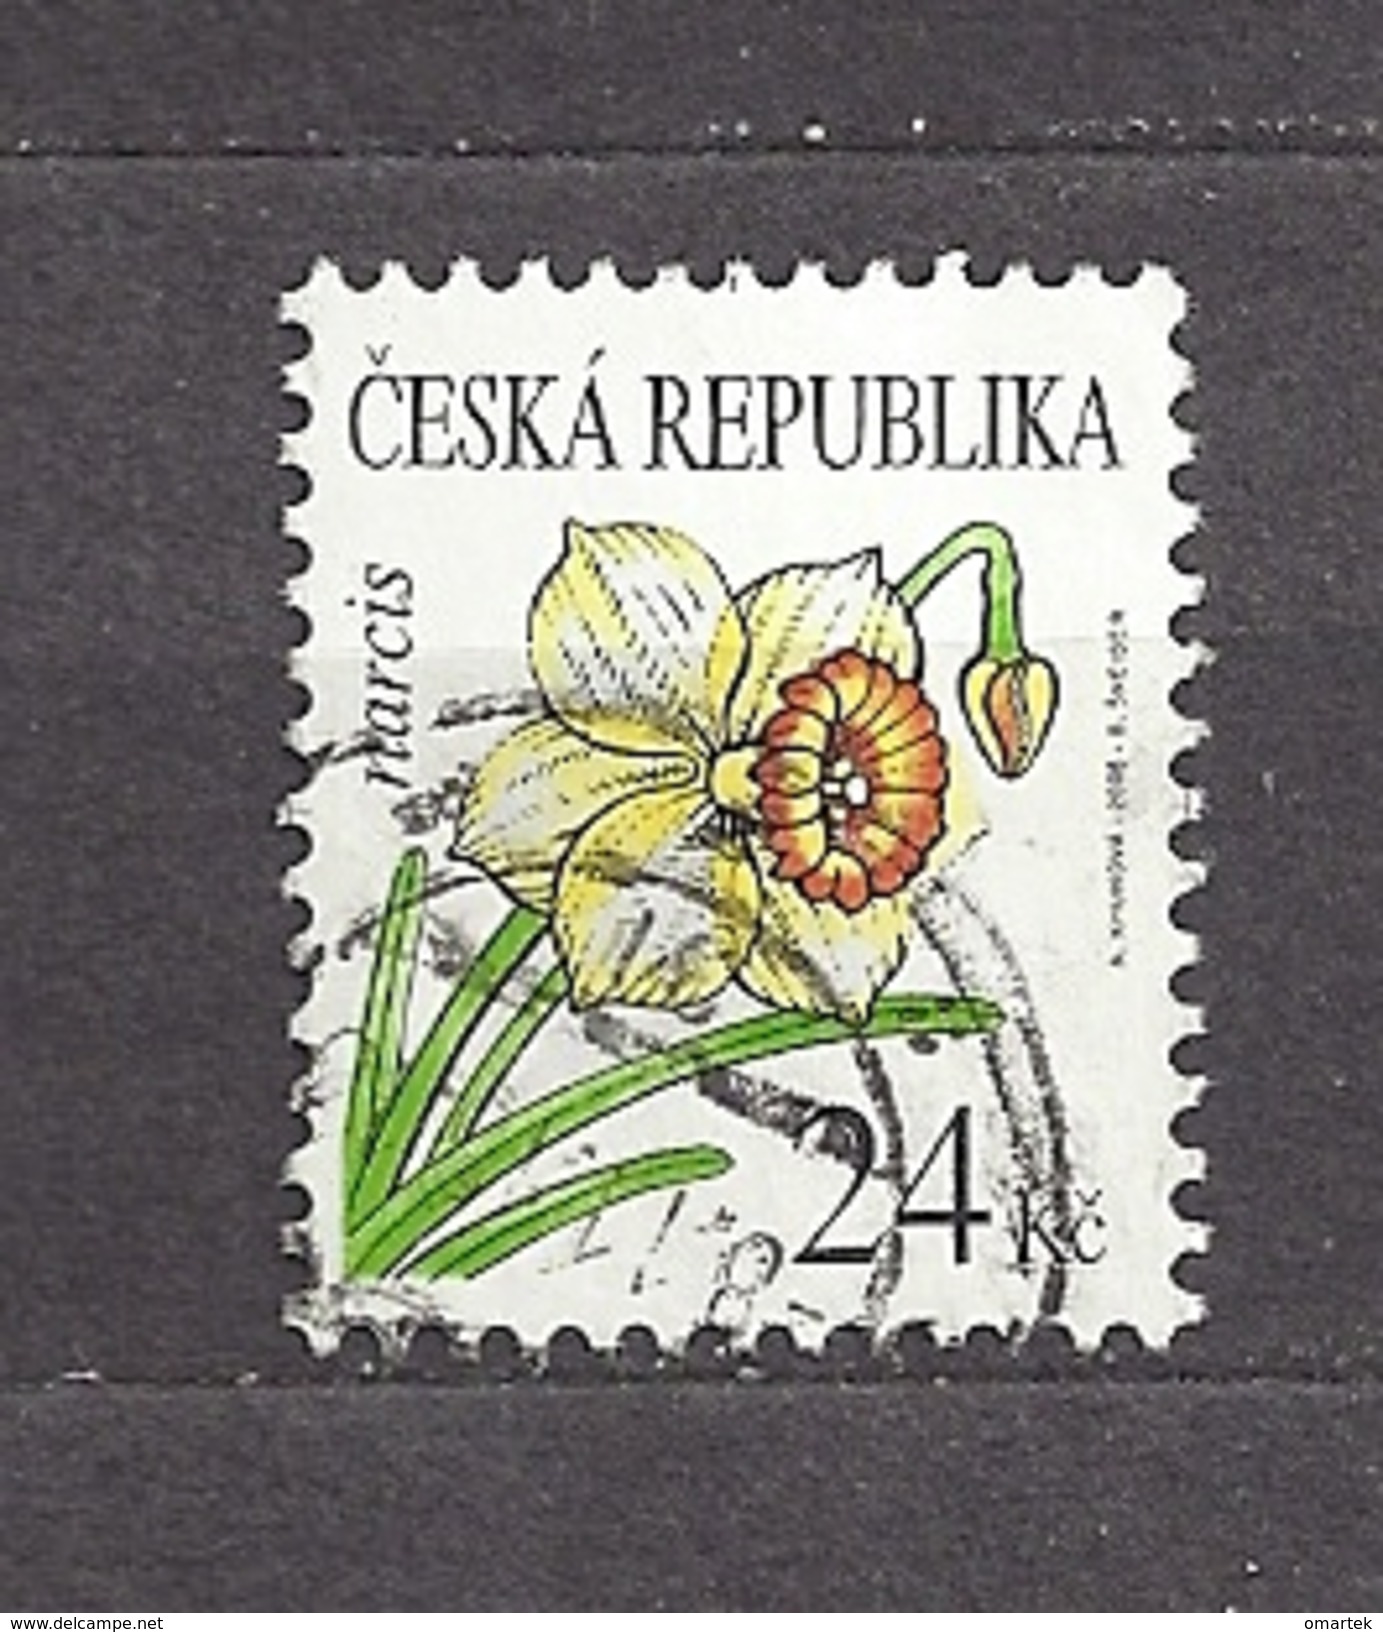 Czech Republic 2006 ⊙ Mi 463 Sc 3294 Flowers  Blumen  Daffodil. Tschechische Republik. C1 - Used Stamps